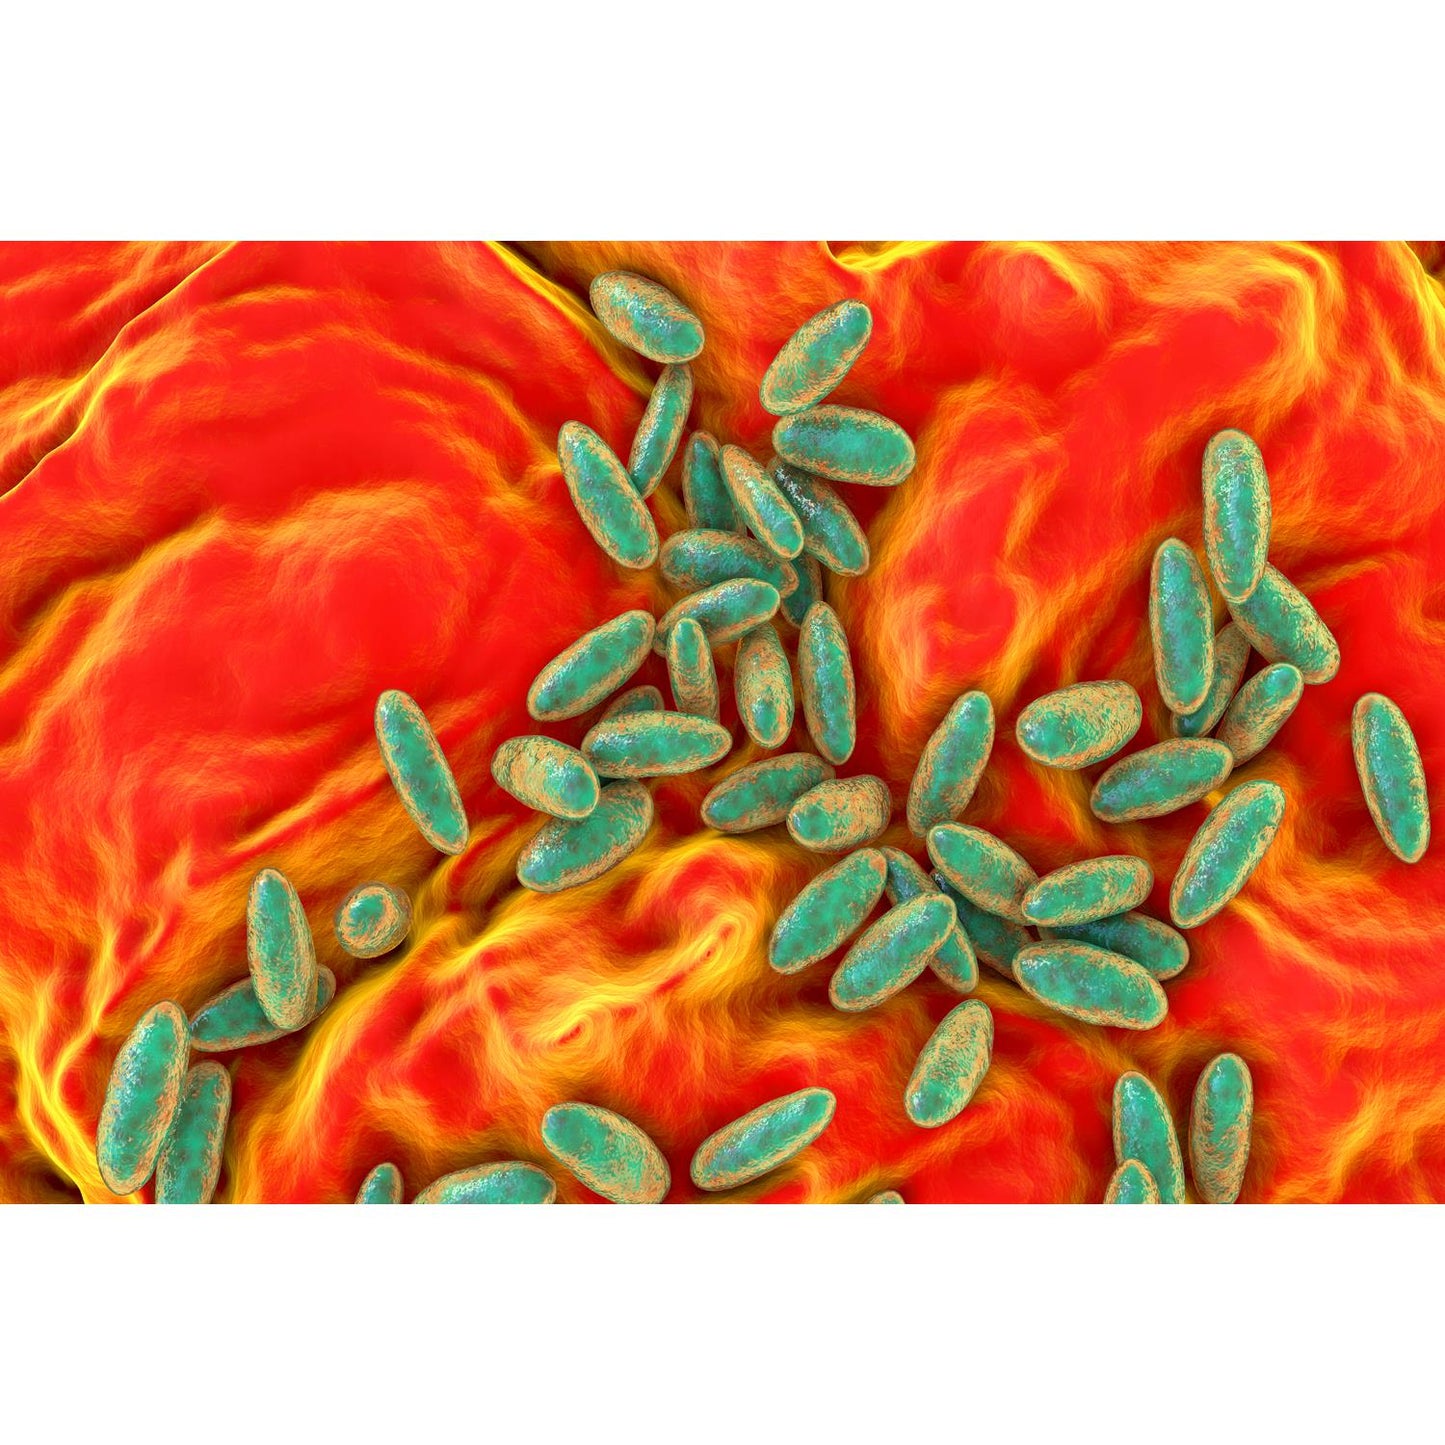 Medical Office Art - Plague bacteria